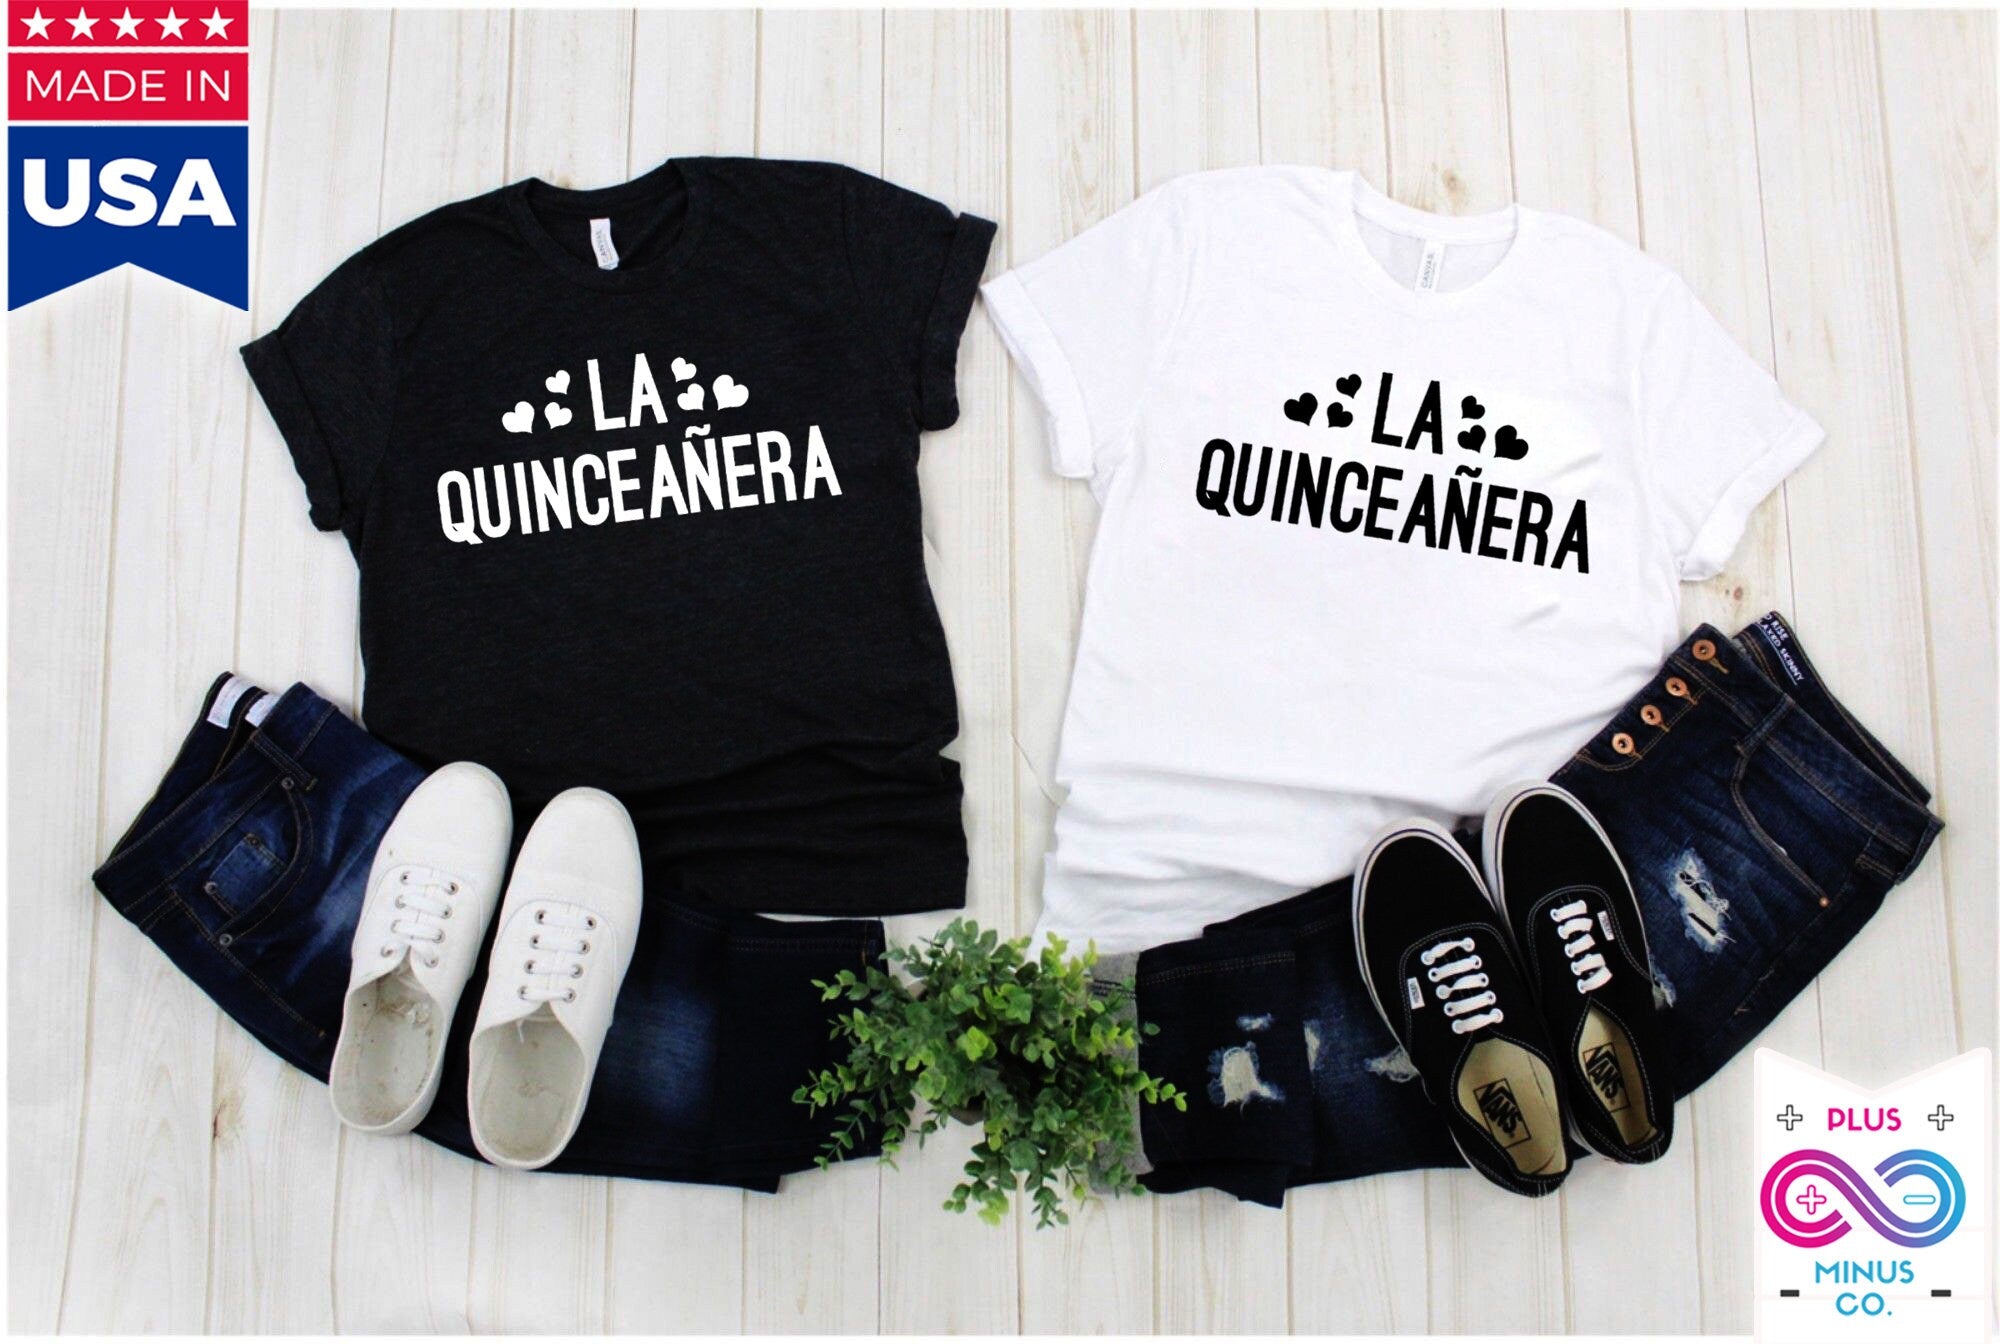 La Quinceañera Latina T-shirts espagnols, chemise mexicaine Quinceanera Gift Rehersal Party Outfit, Quince Anos Party chemises de coing - plusminusco.com